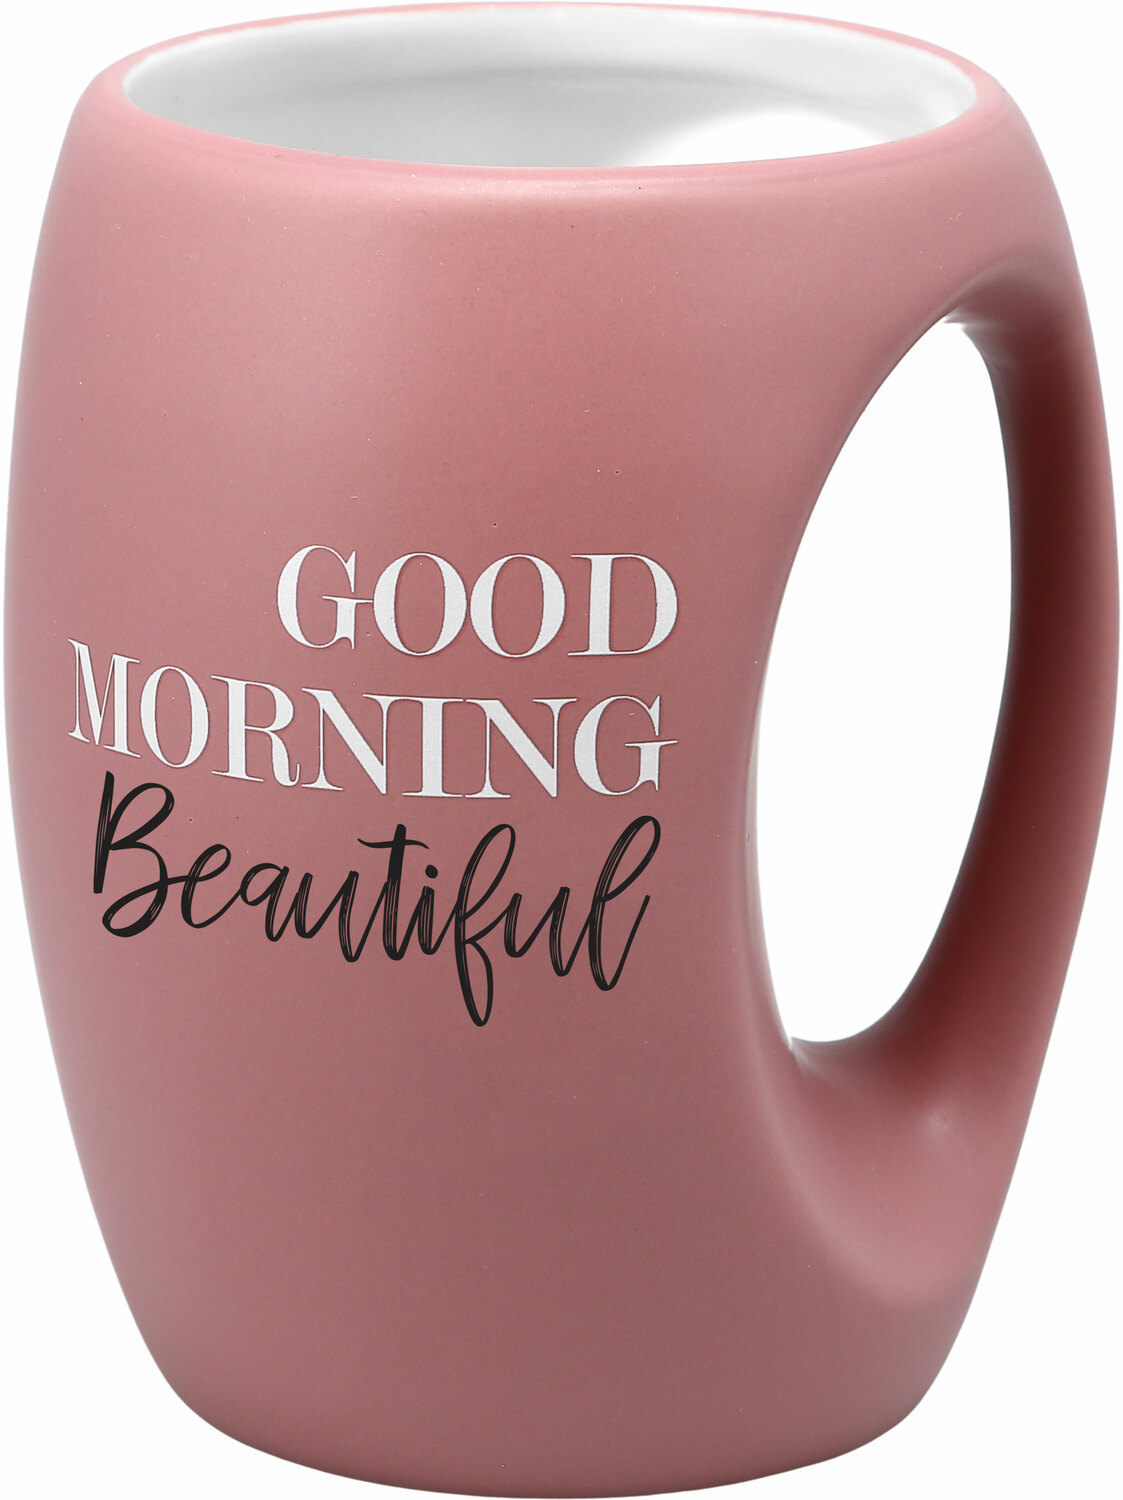 Beautiful by Good Morning - Beautiful - 16 oz Cup